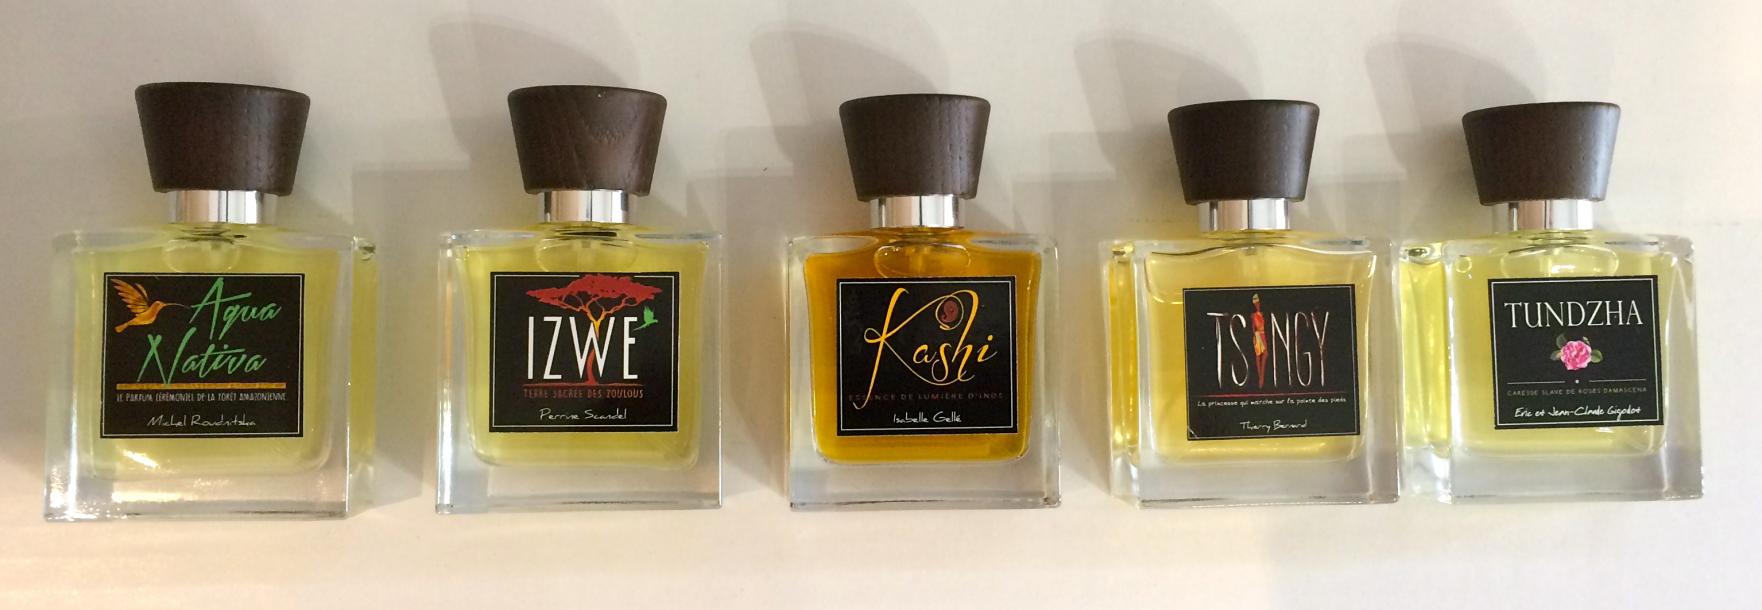 Collection Parfumeurs du monde.jpg